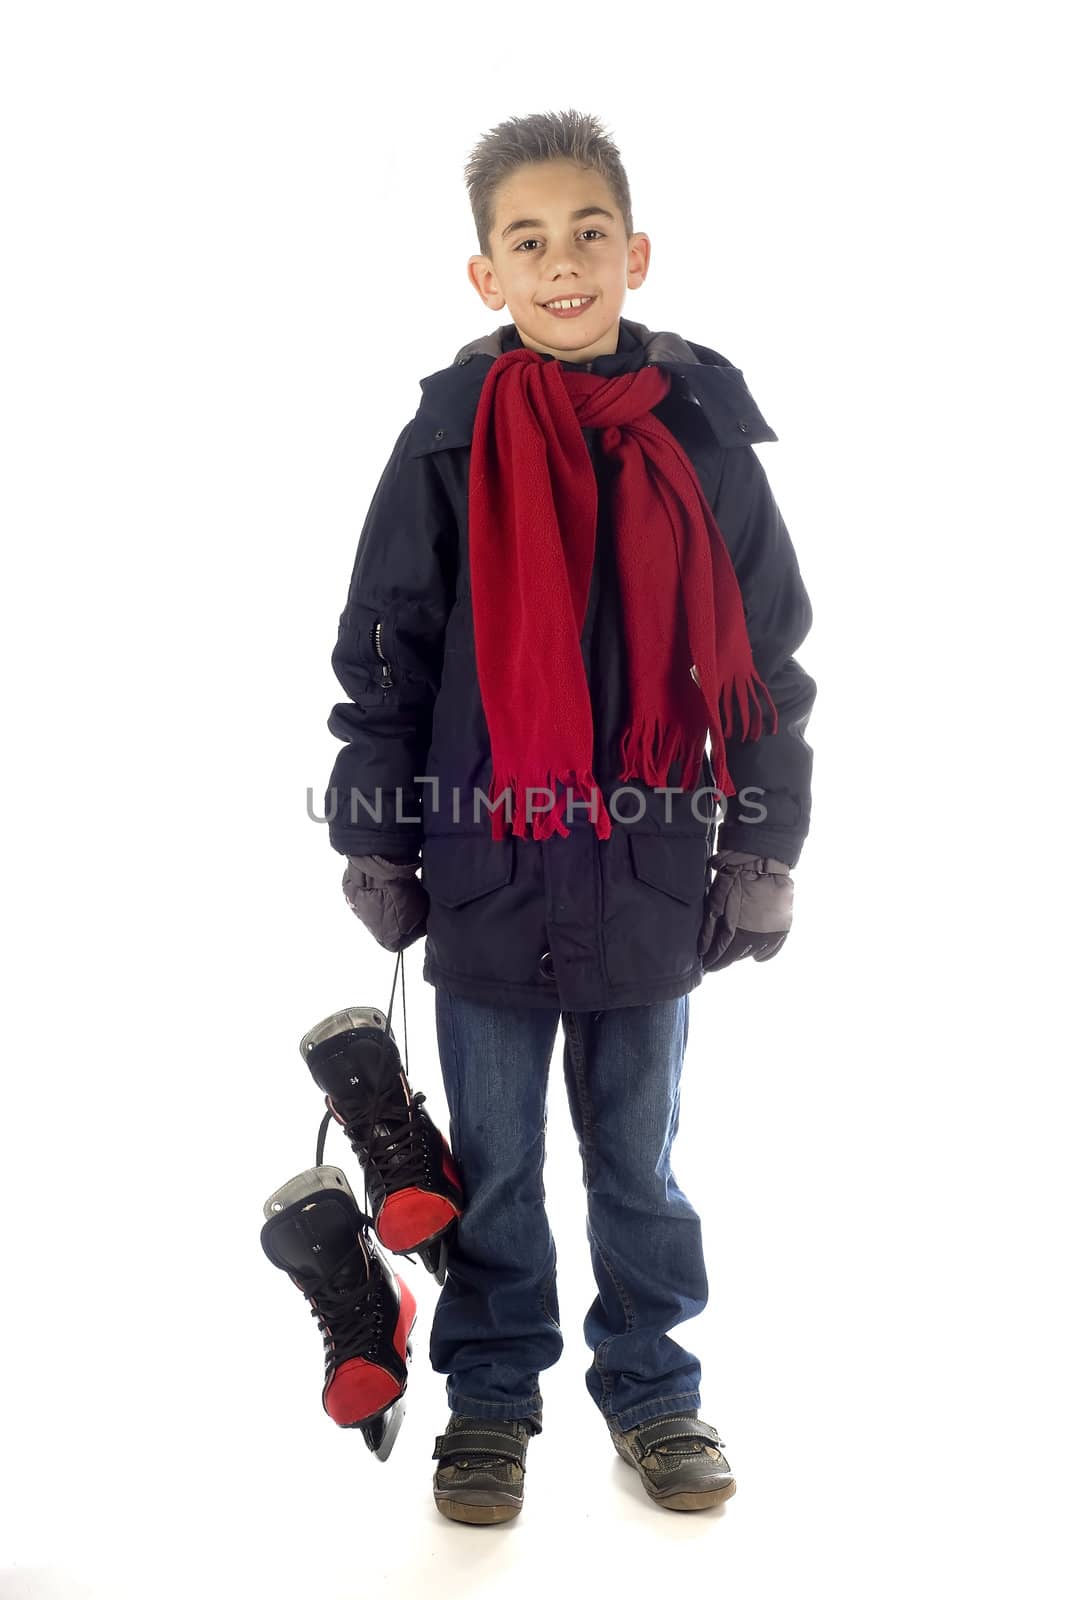 a young boy holding his skates